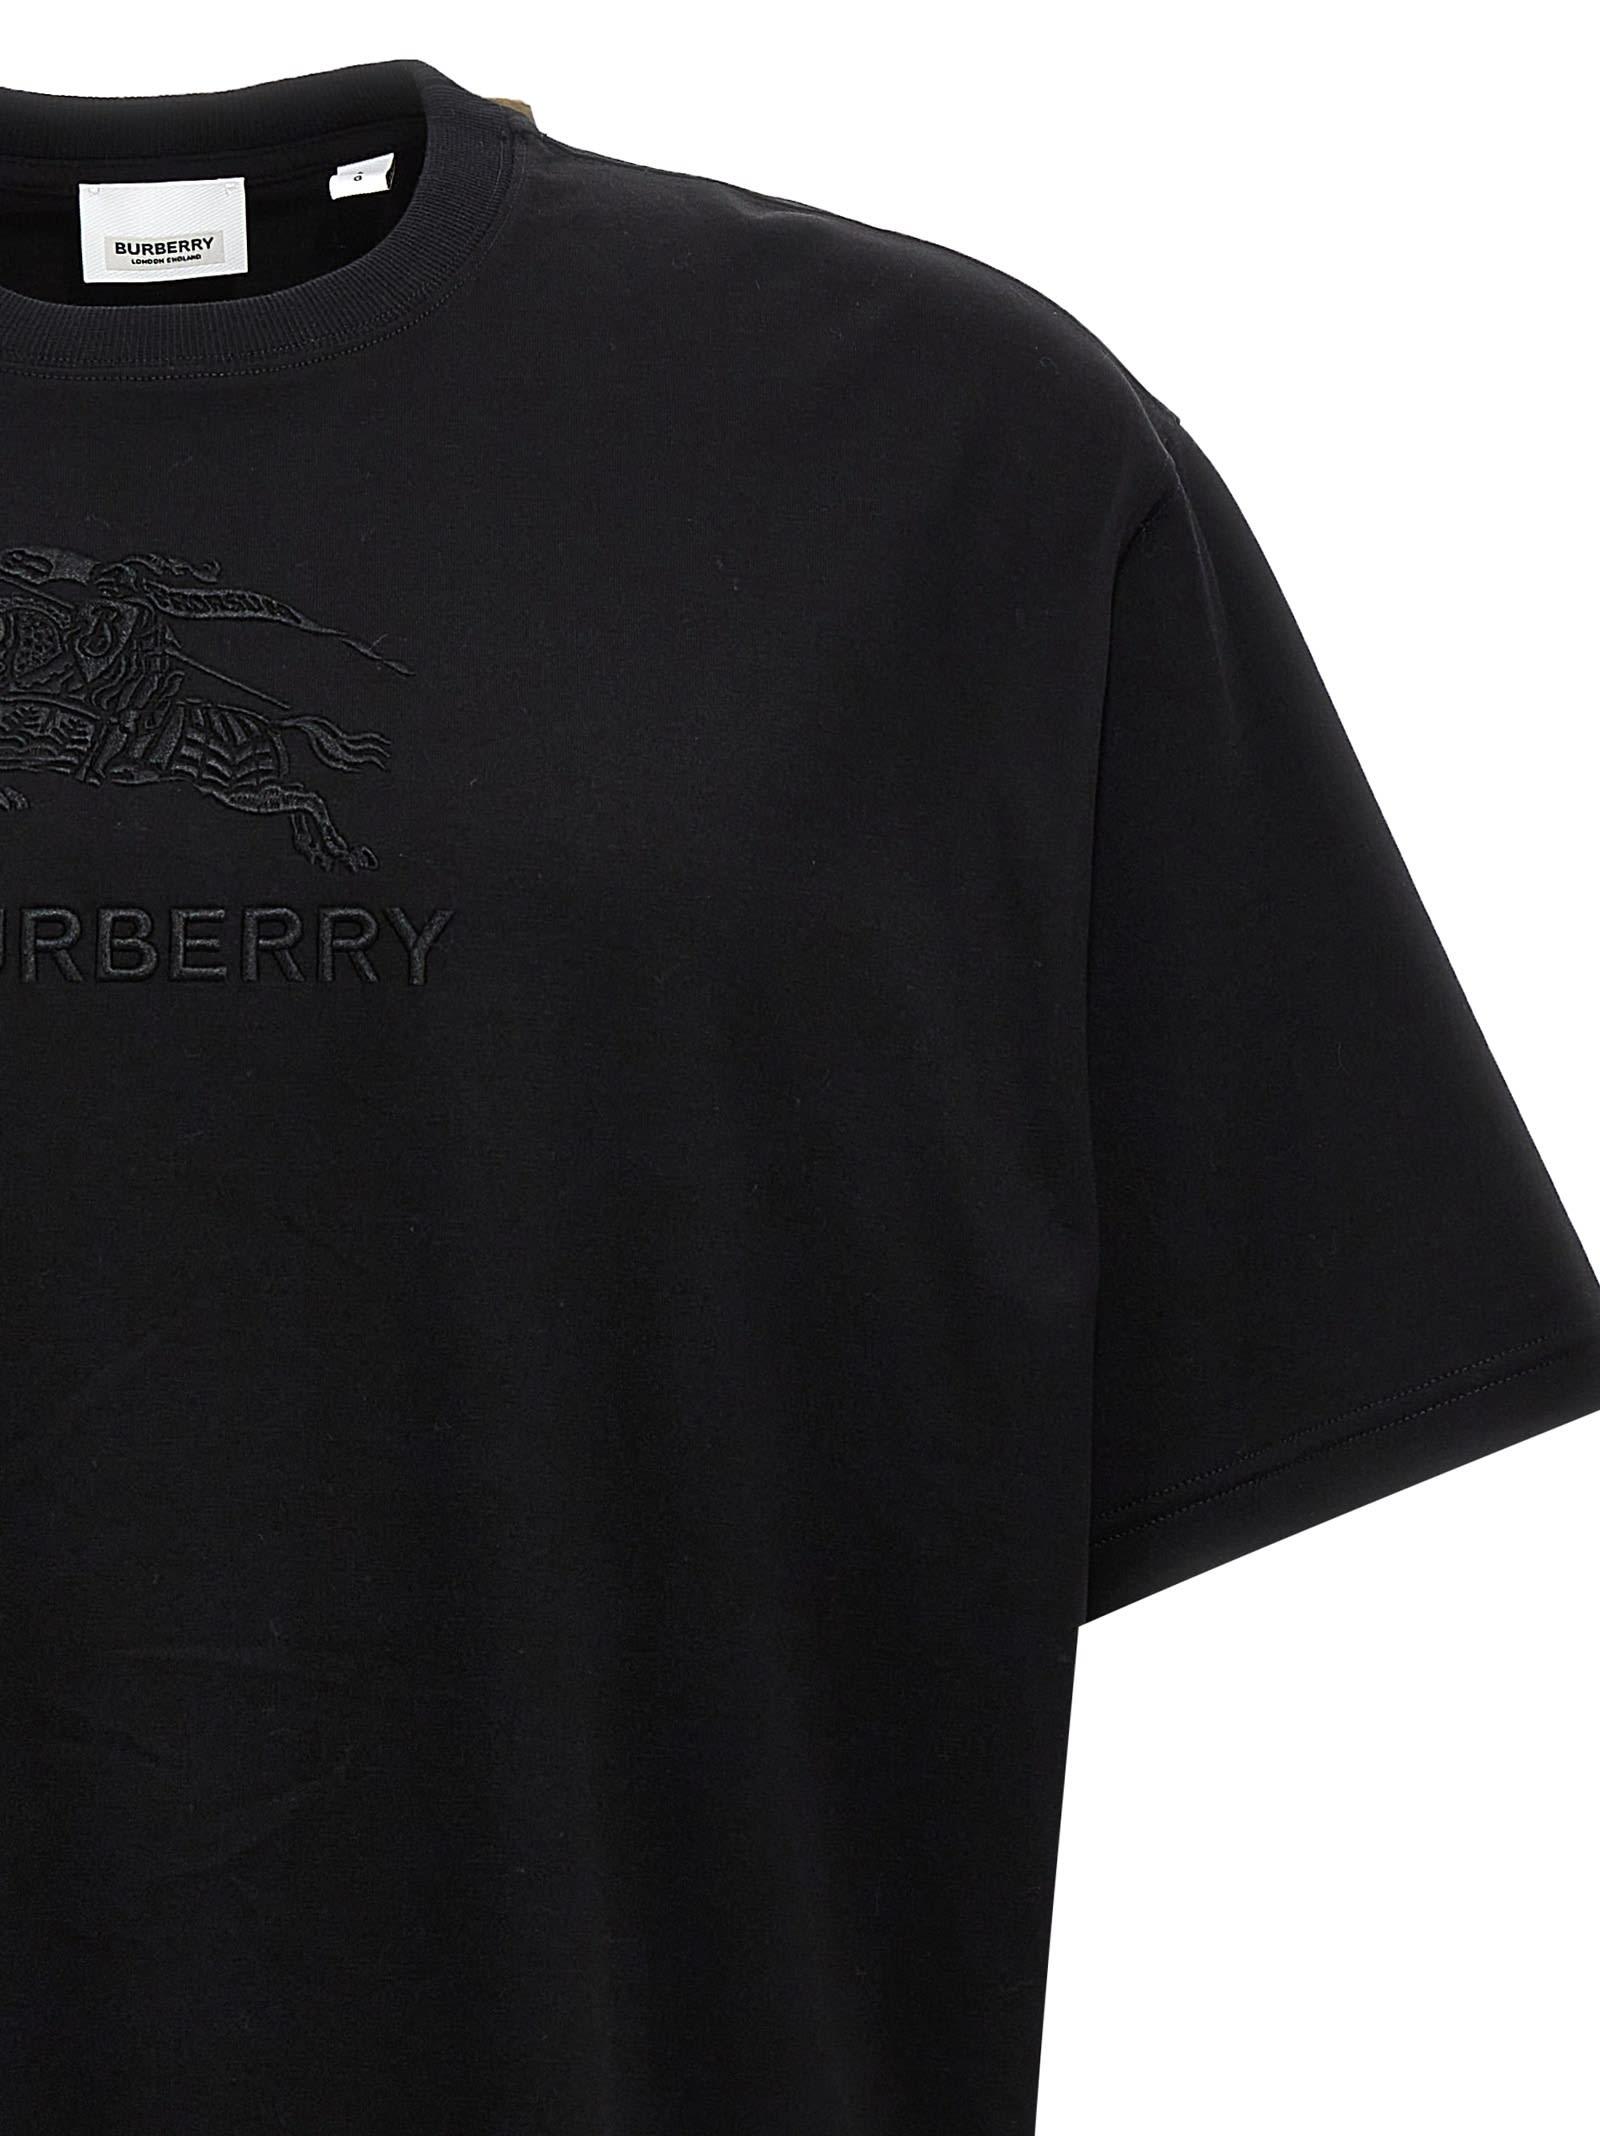 Burberry T-shirt in Black for Men | Lyst